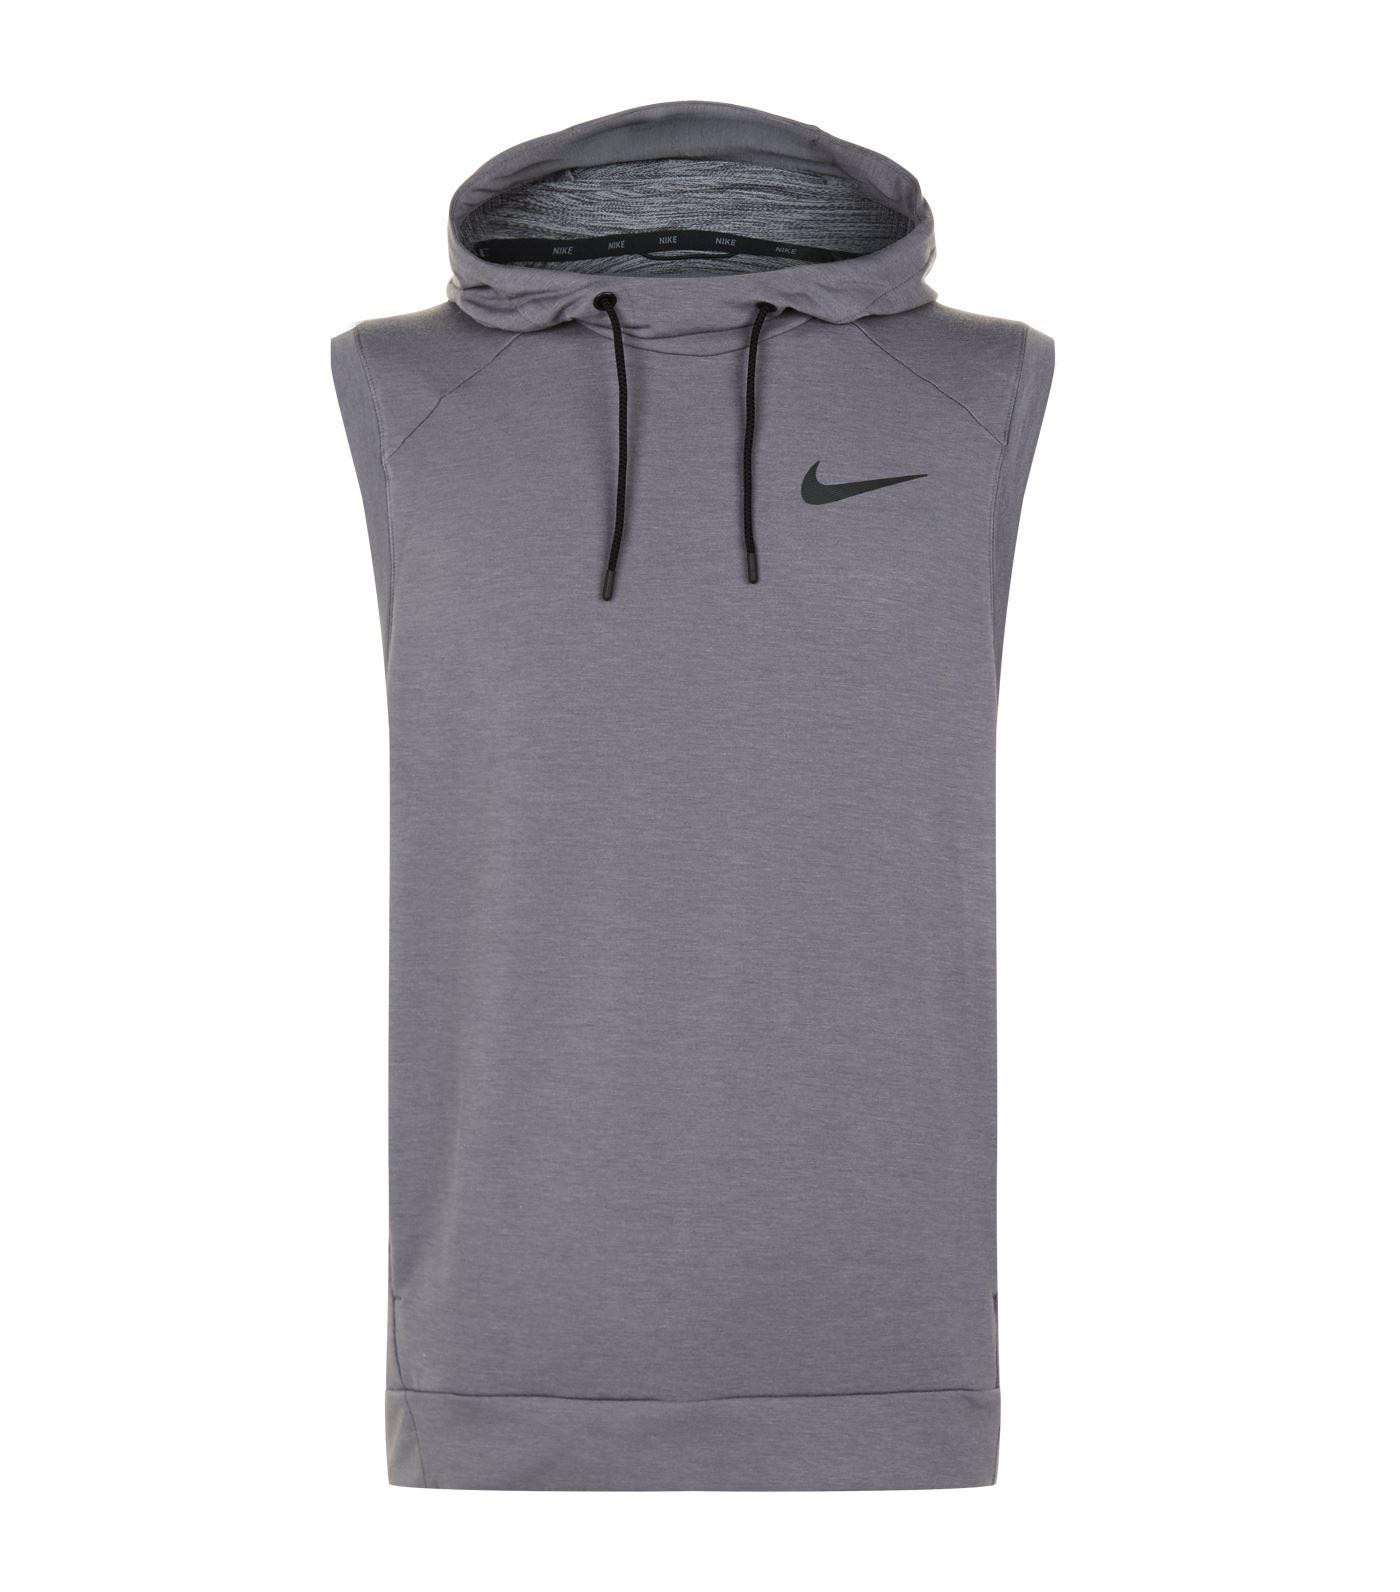 Nike Dri-fit Sleeveless Hoodie in Gray for Men